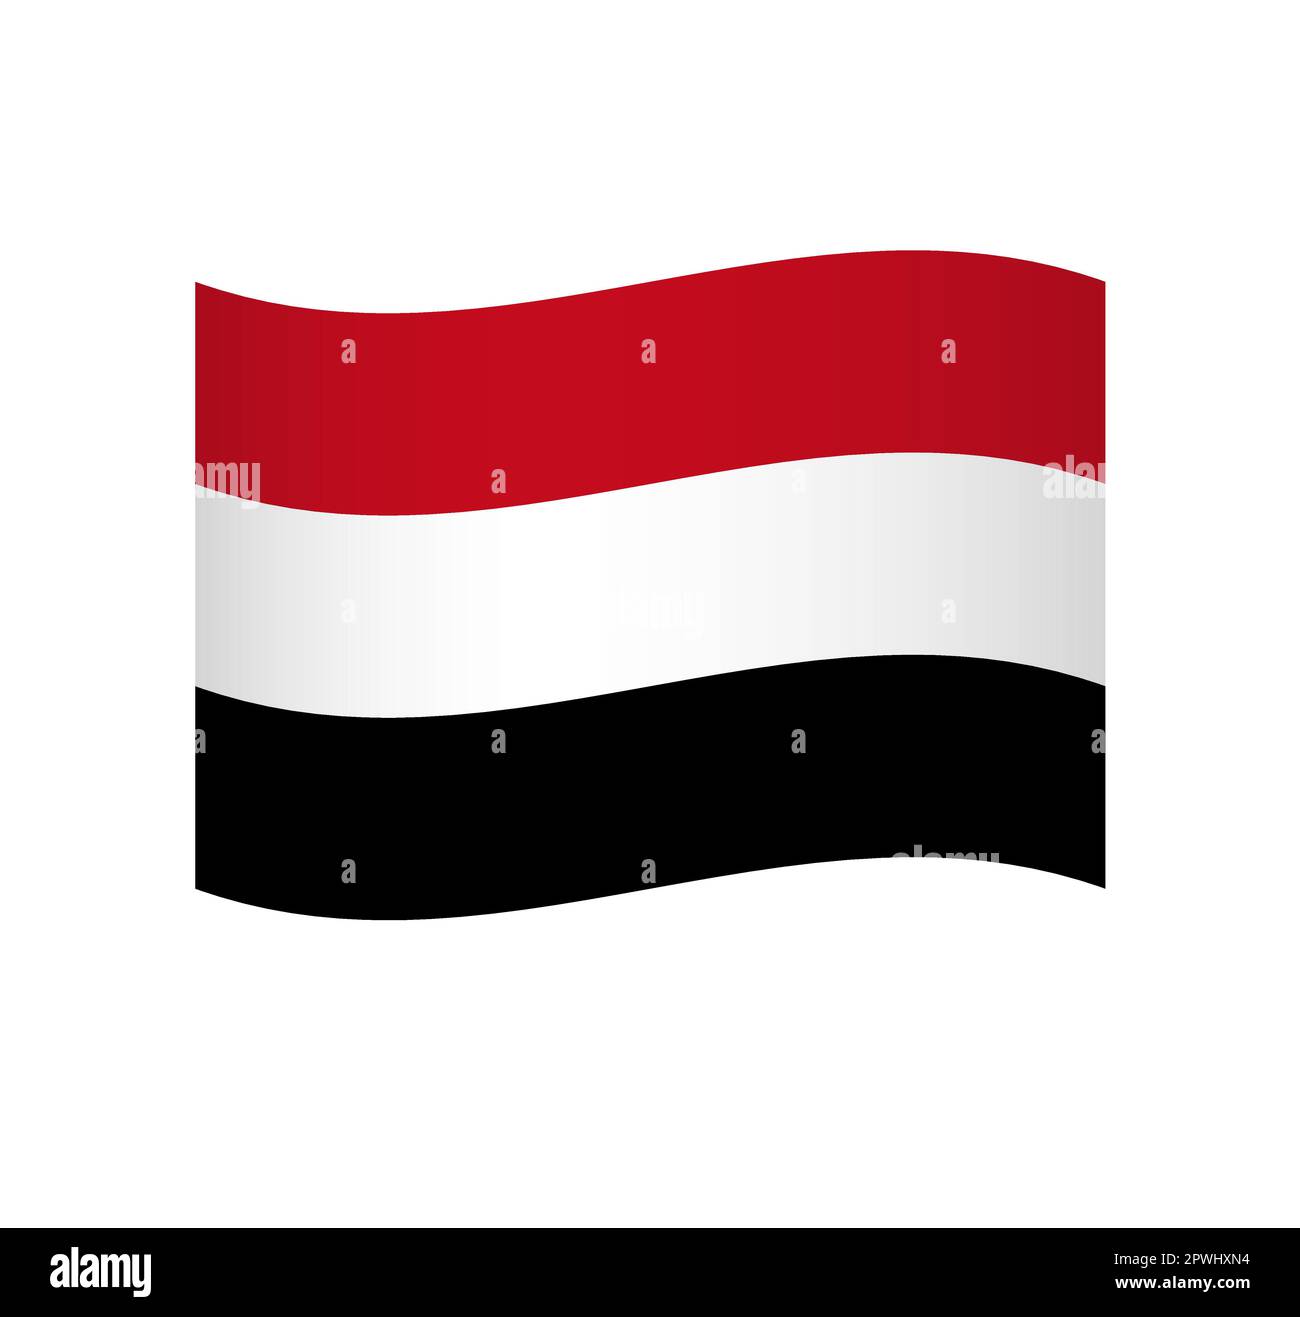 Yemen emblem hi